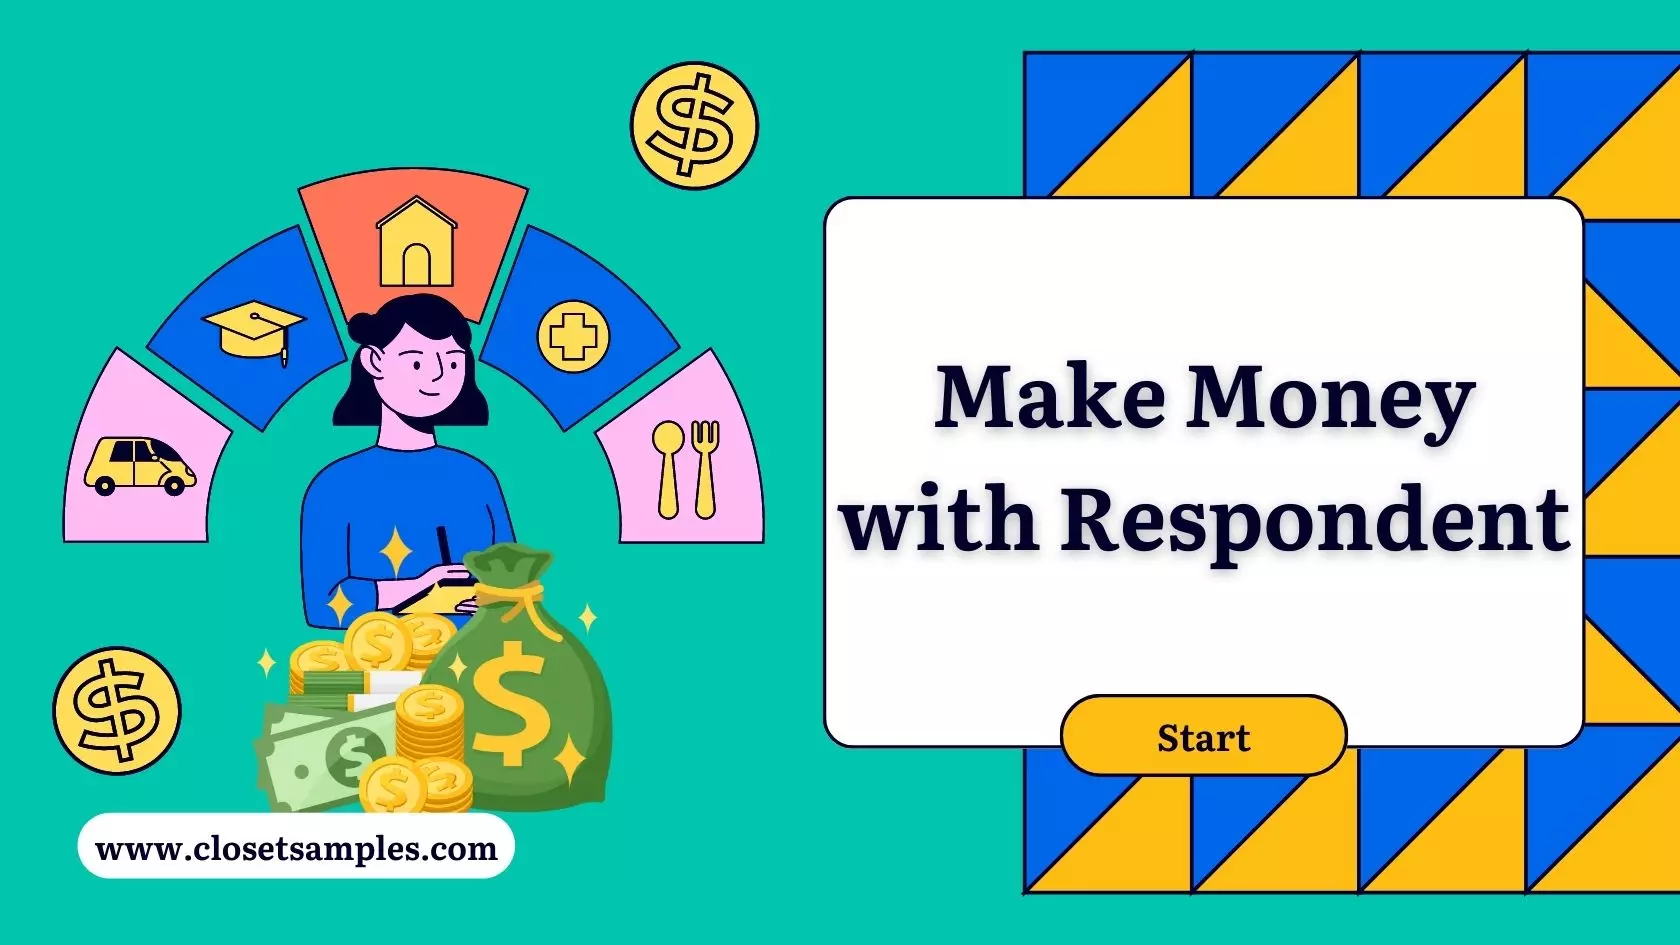 Make Money with Respondent